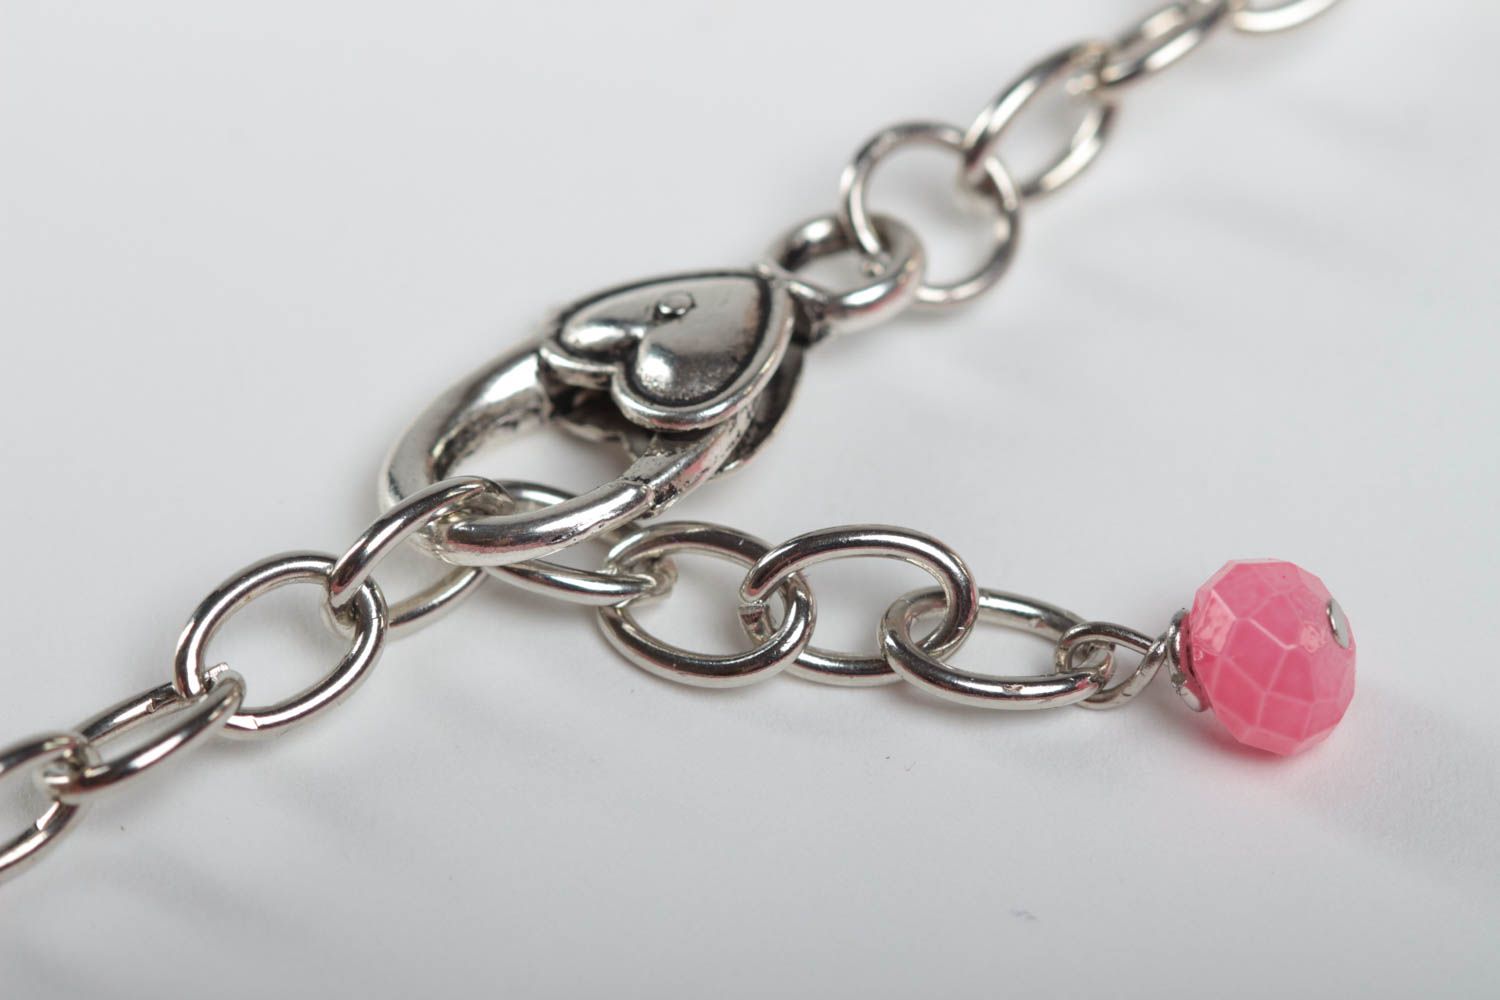 Handmade neckalce designer accessory gift ideas unusual jewelry gift for her photo 4